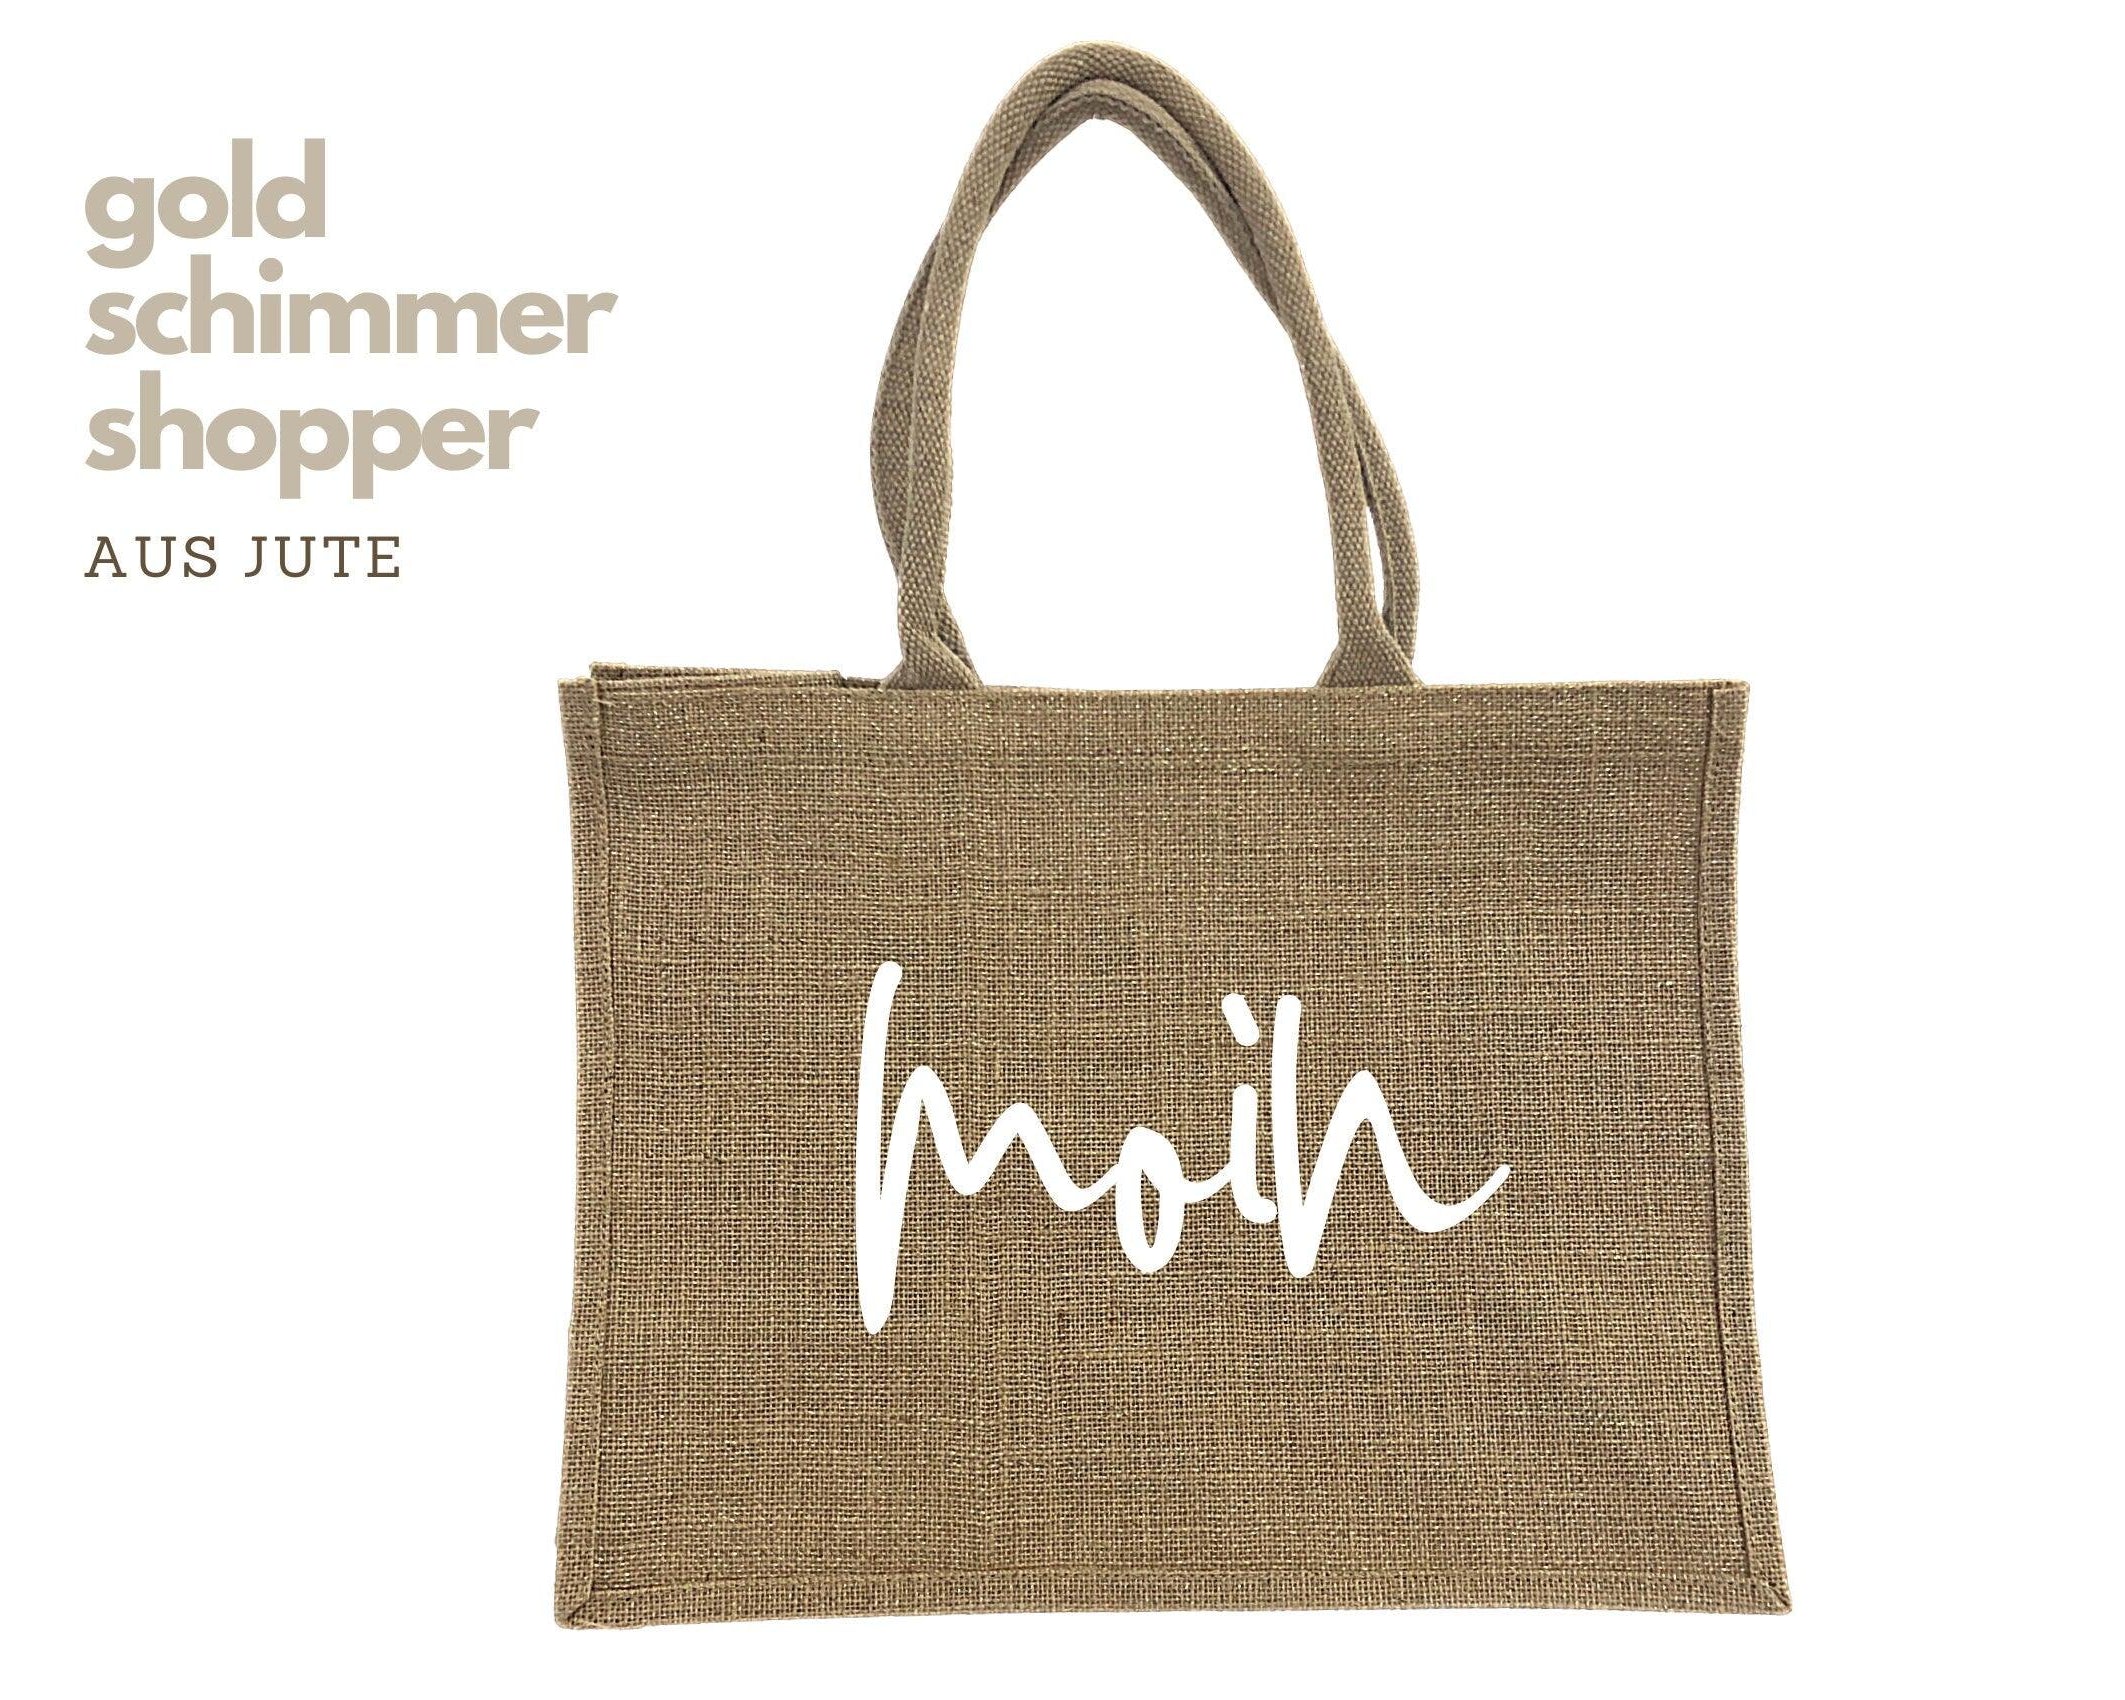 Tasche Jute | MOIN | gold schimmernder Shopper - Roo's Gift Shop